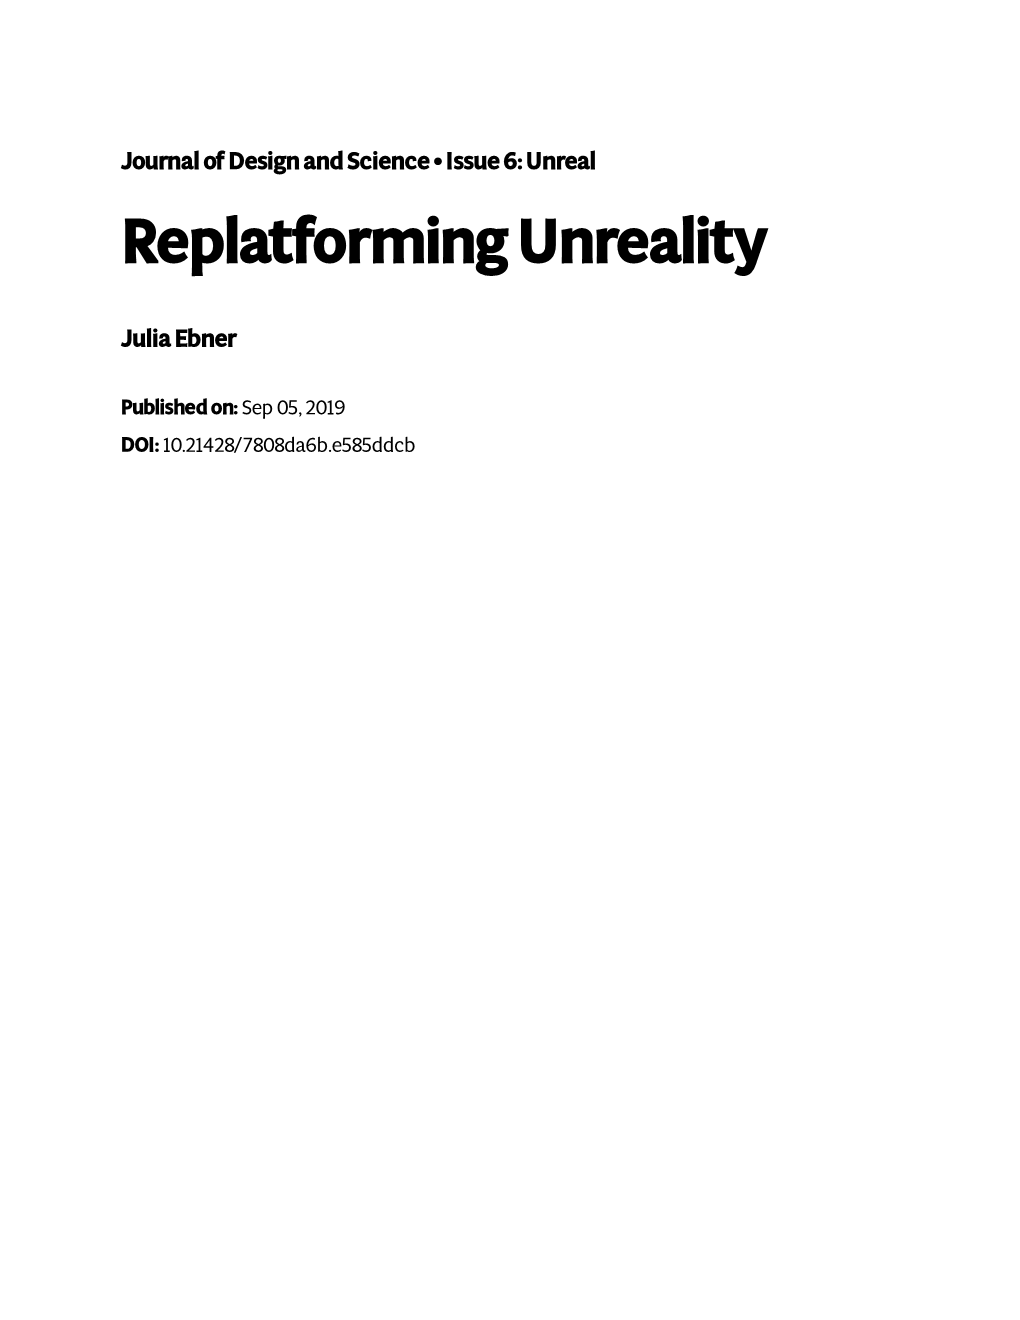 Replatforming Unreality